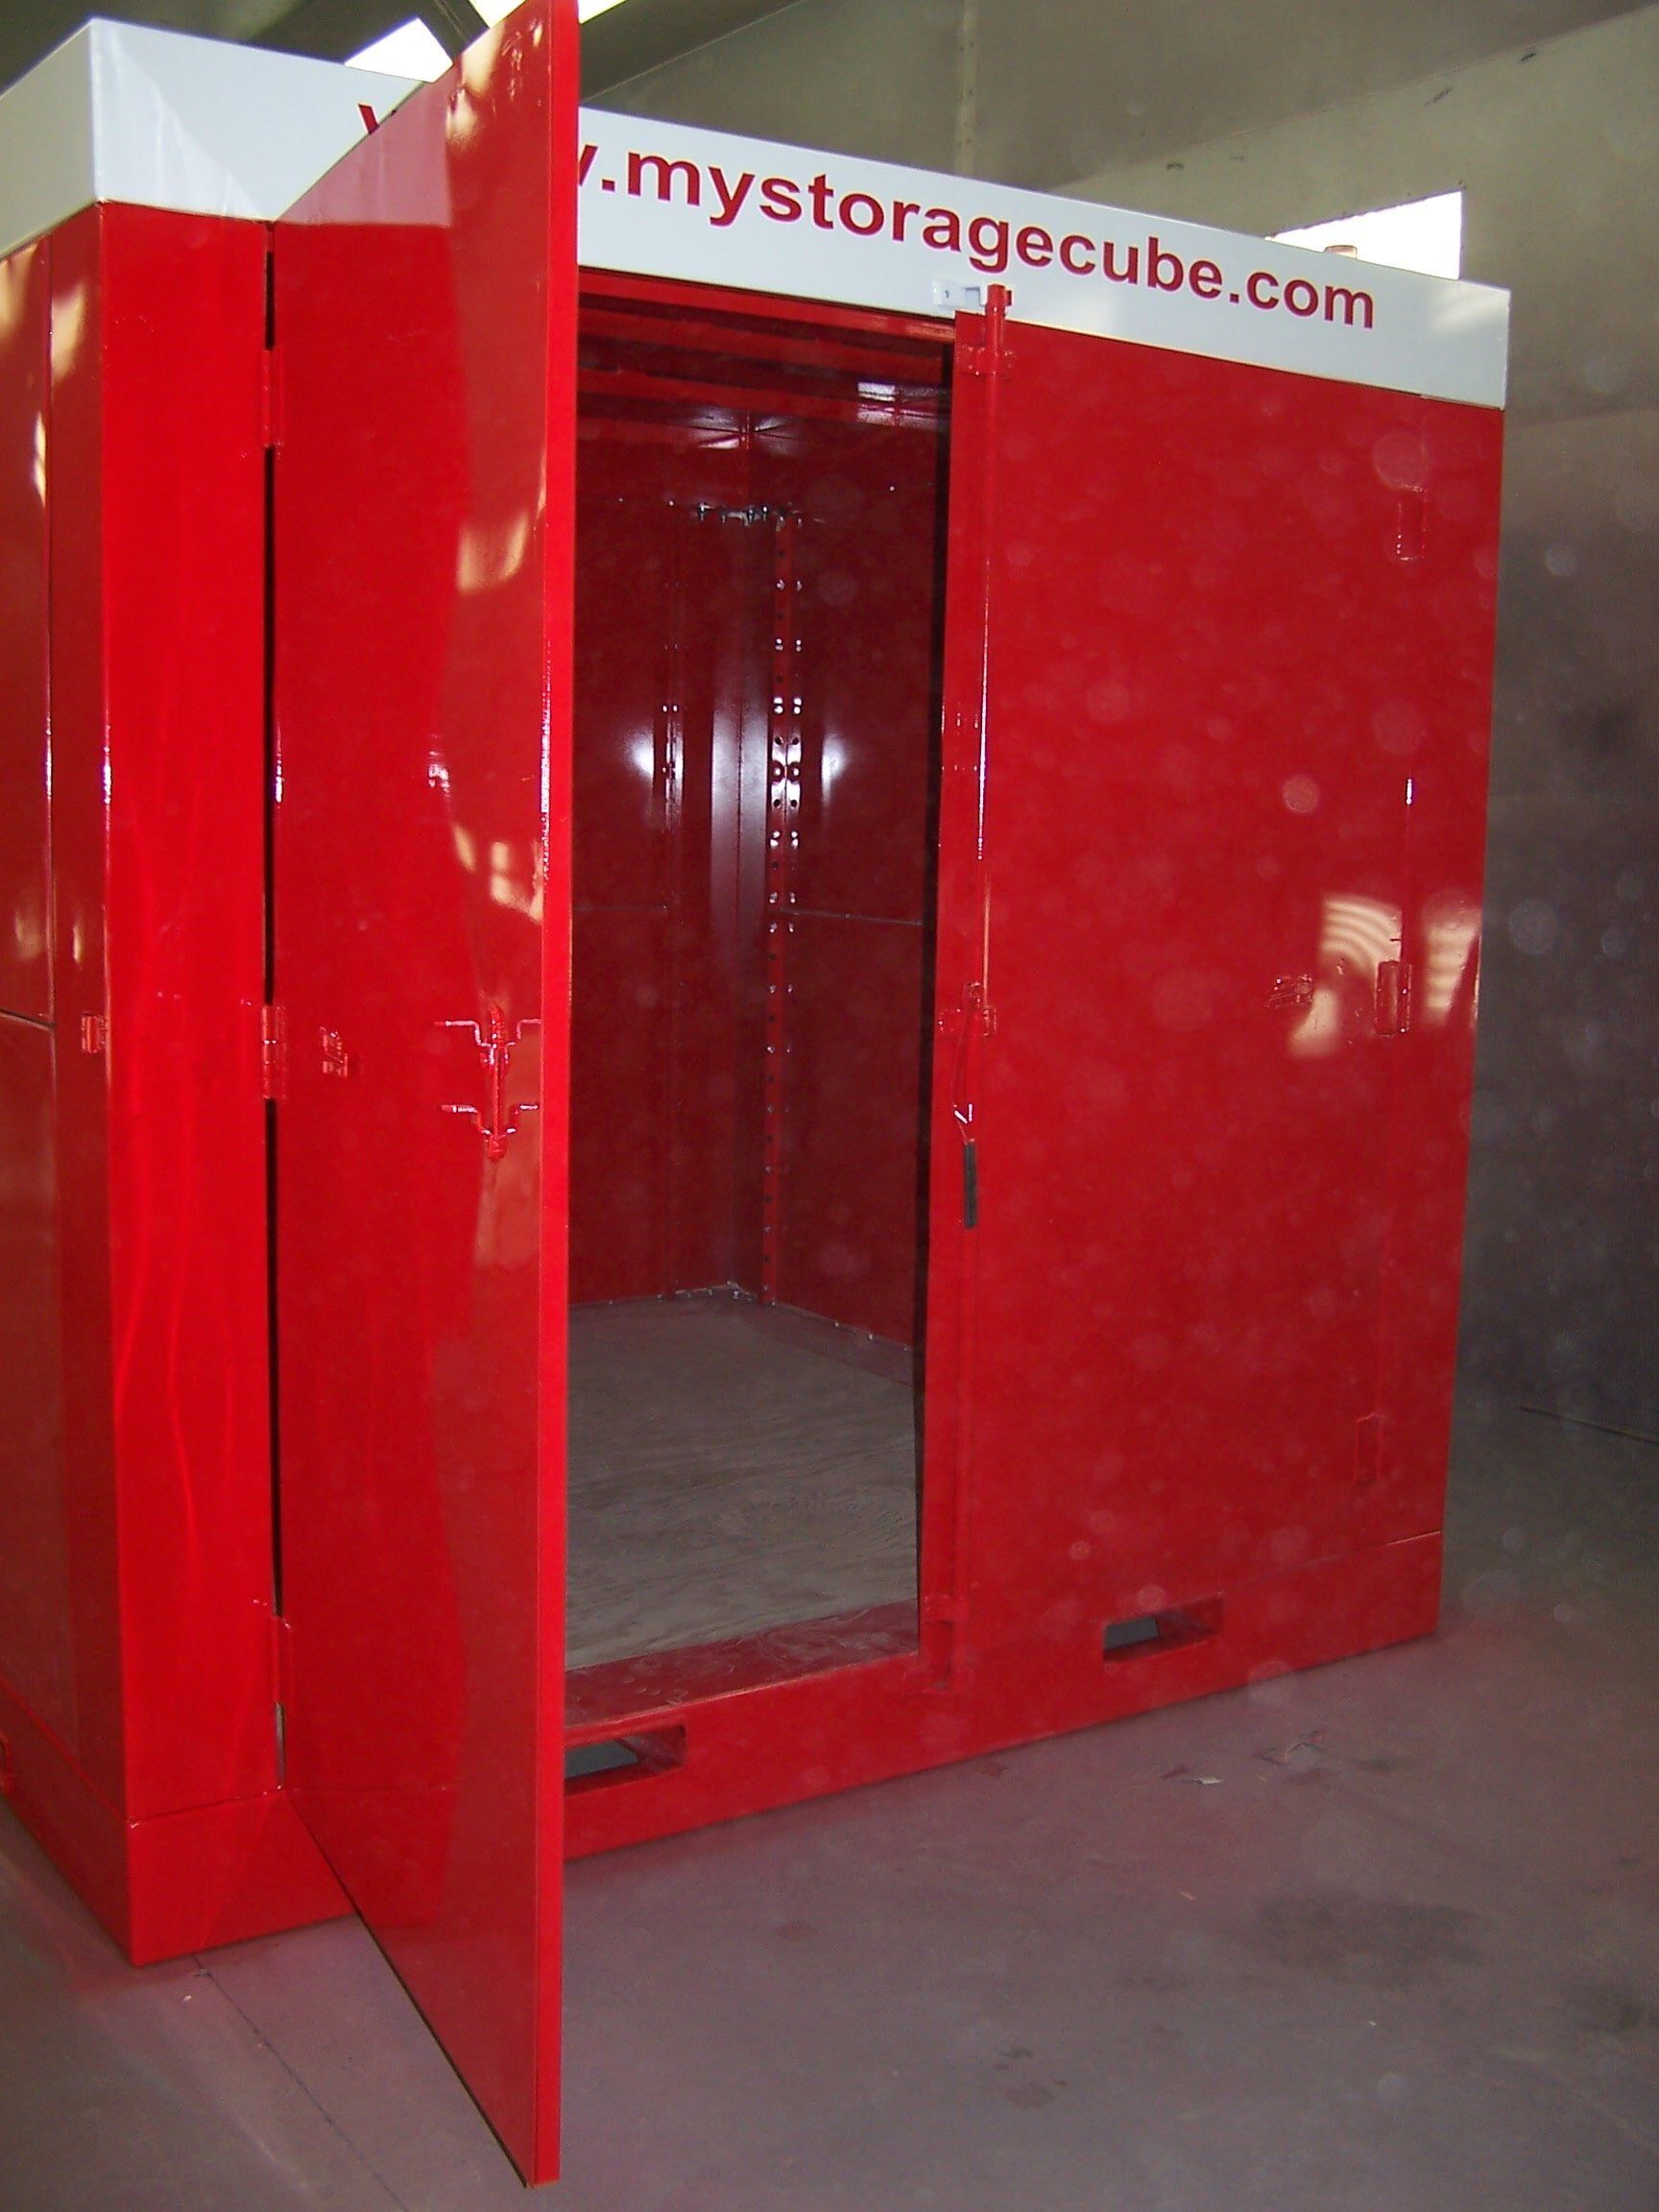 Red storage cube - Mobile Storage in Albuquerque, NM